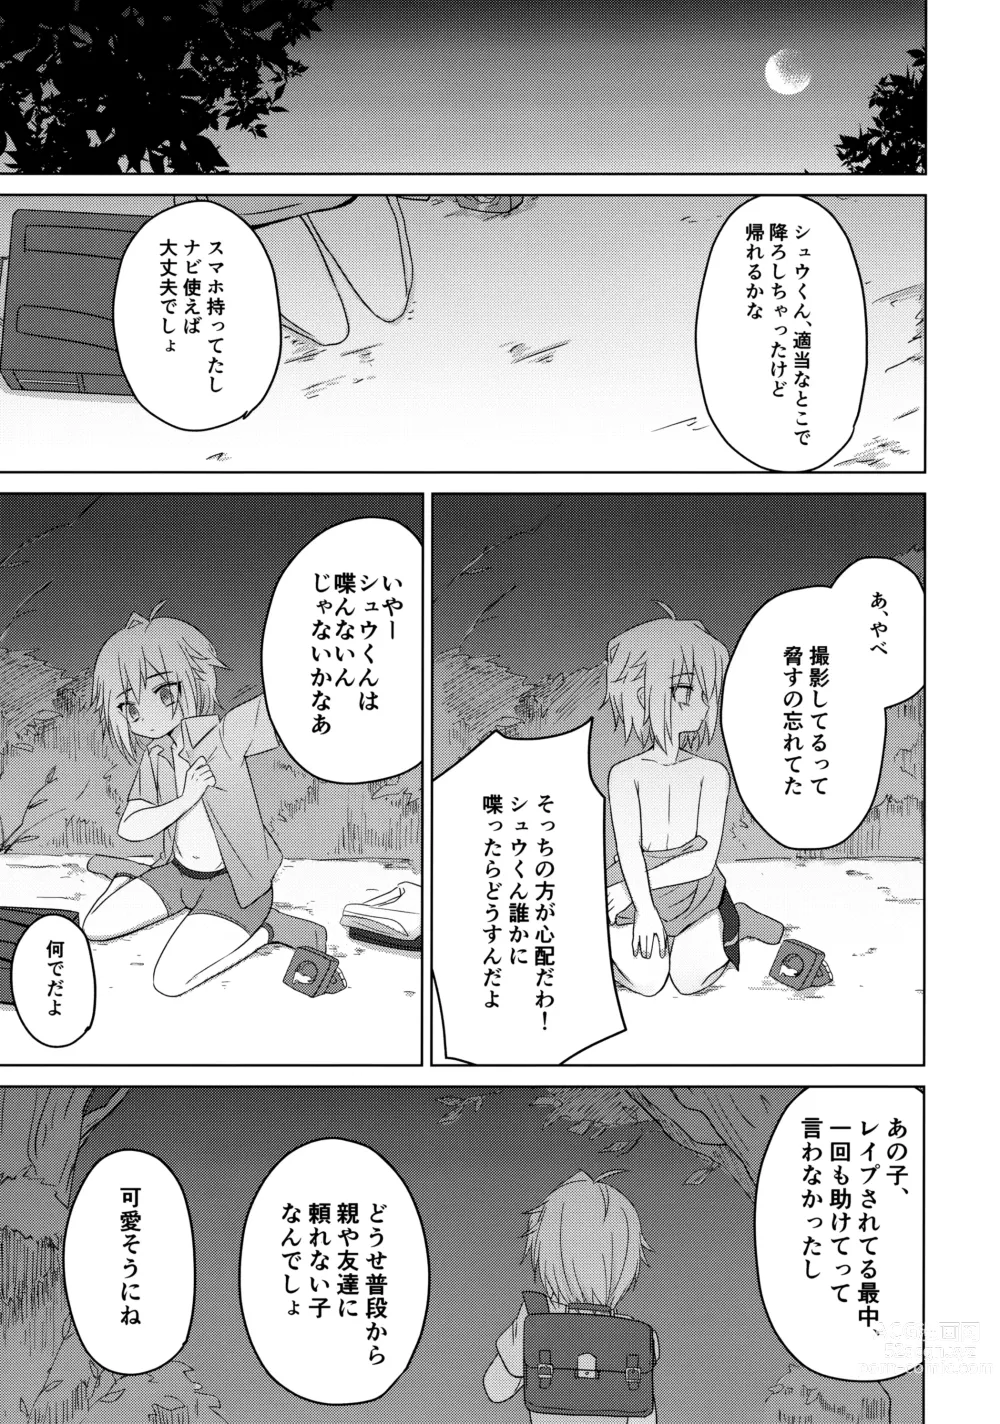 Page 36 of doujinshi Hakoniwa Therapy